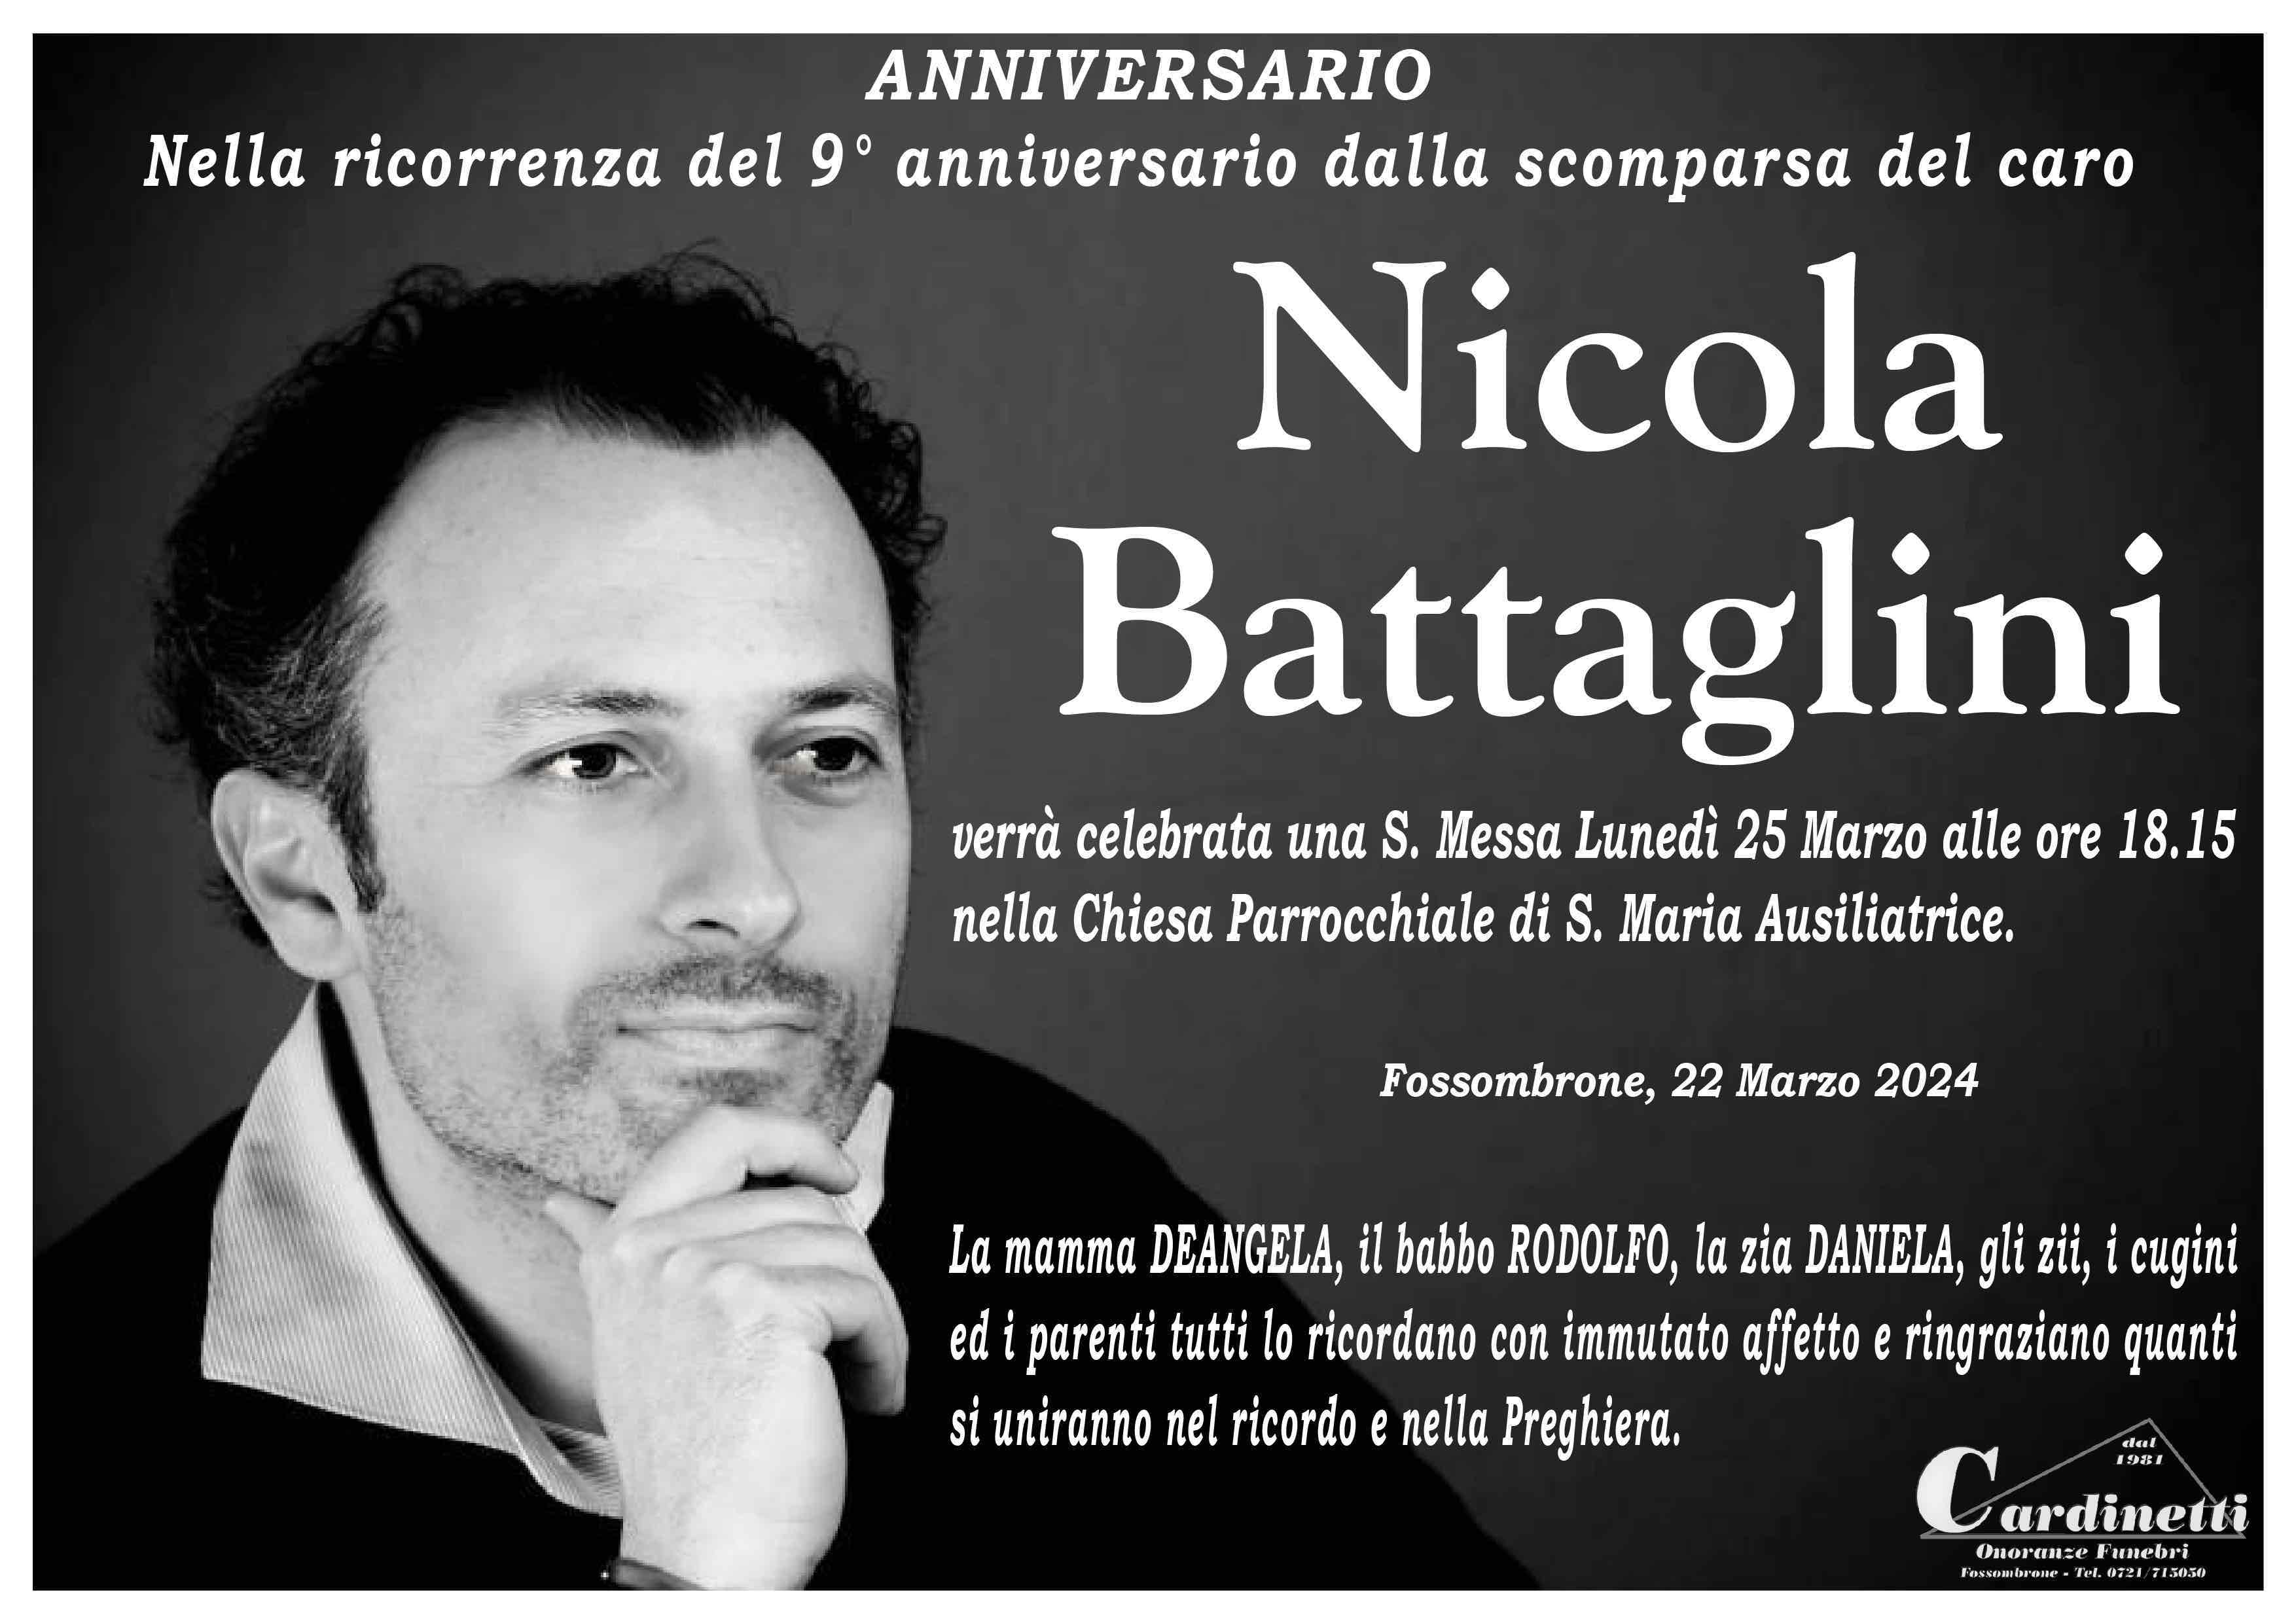 Nicola Battaglini